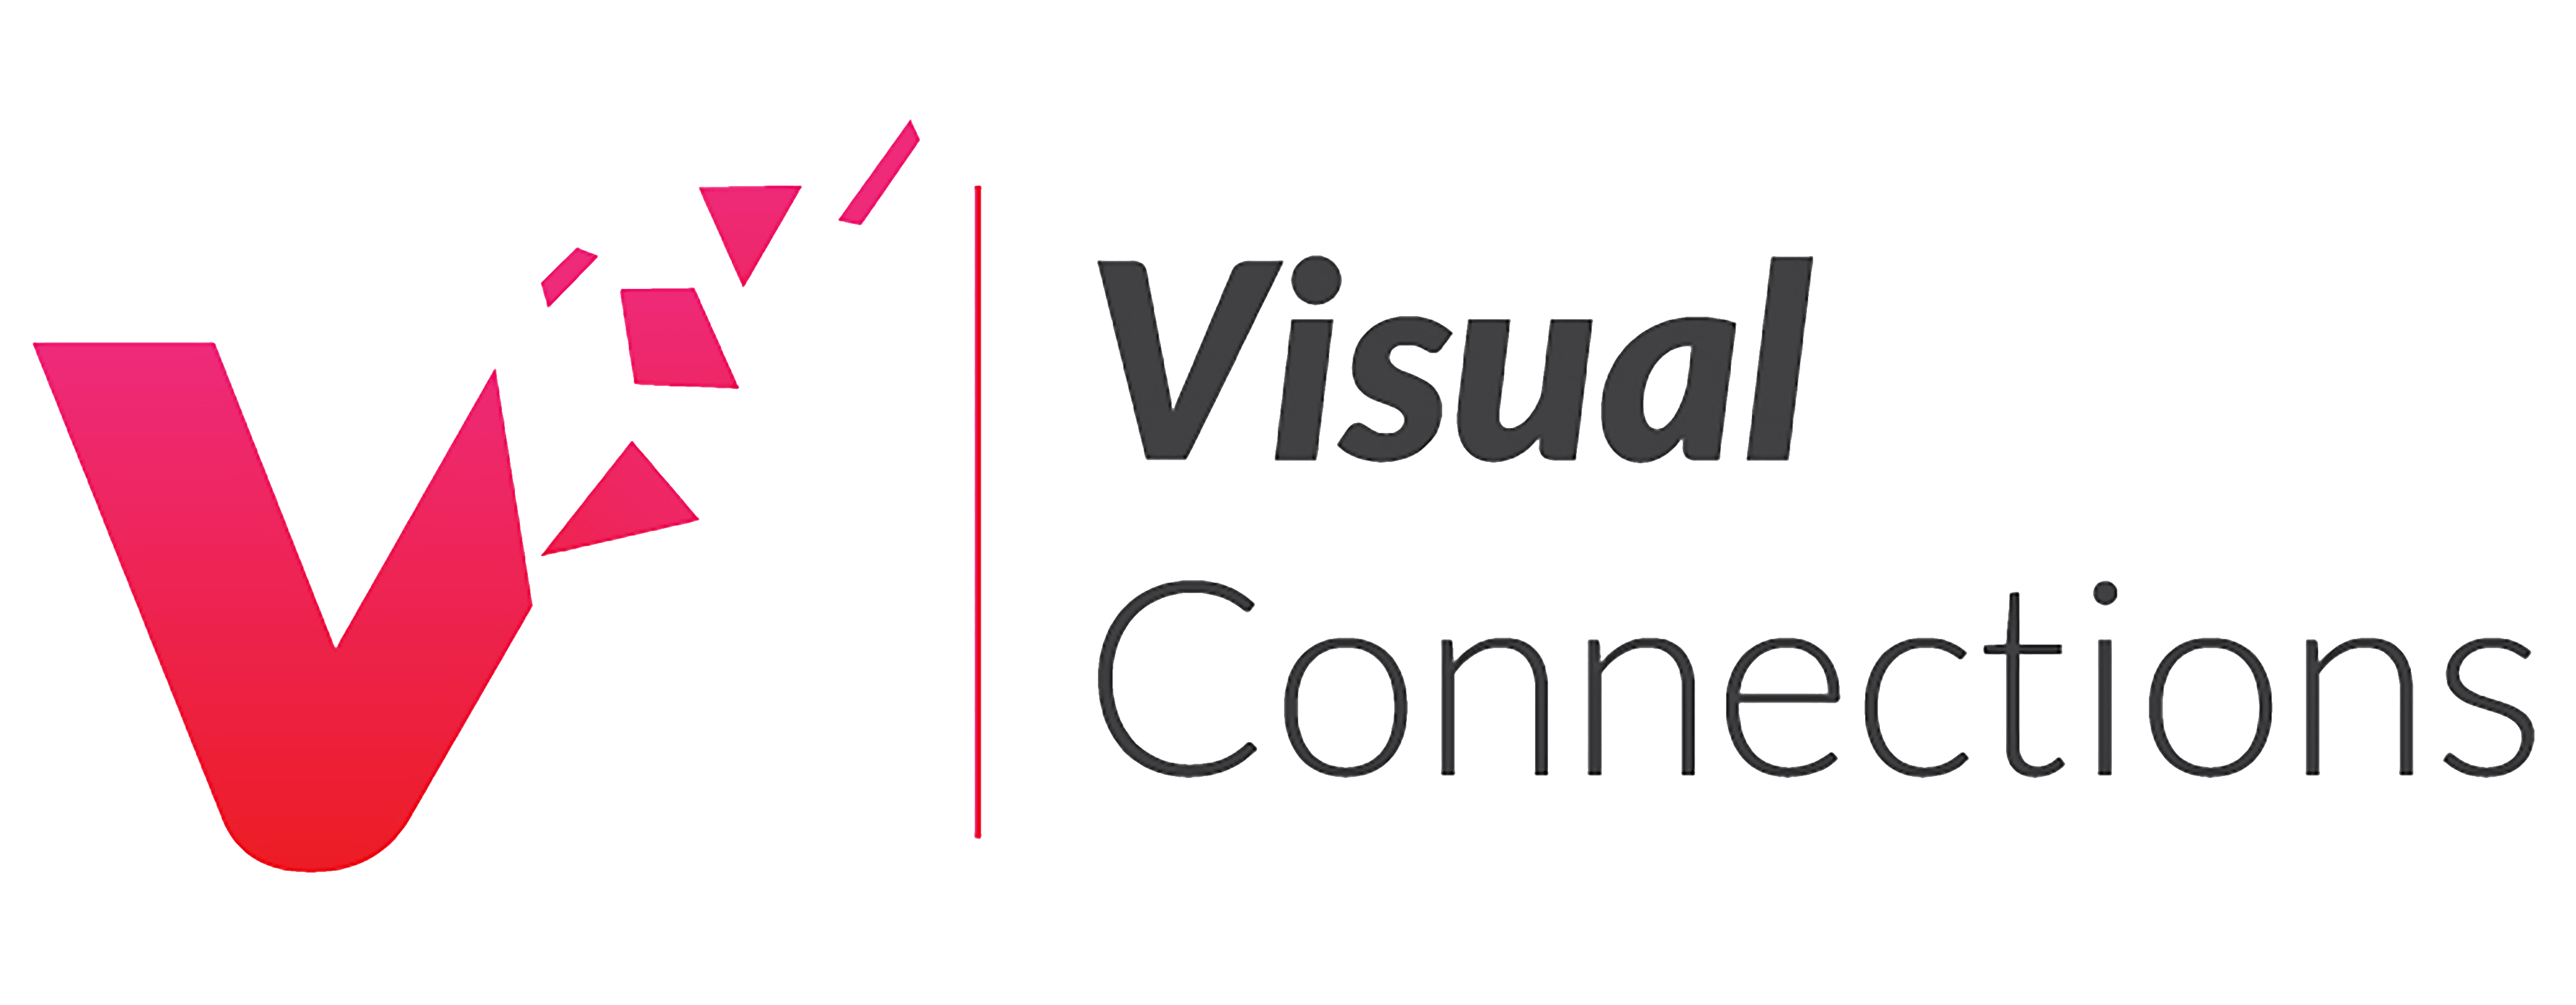 Visual Logo - Visual Logo - visualconnector Photo (39772773) - Fanpop